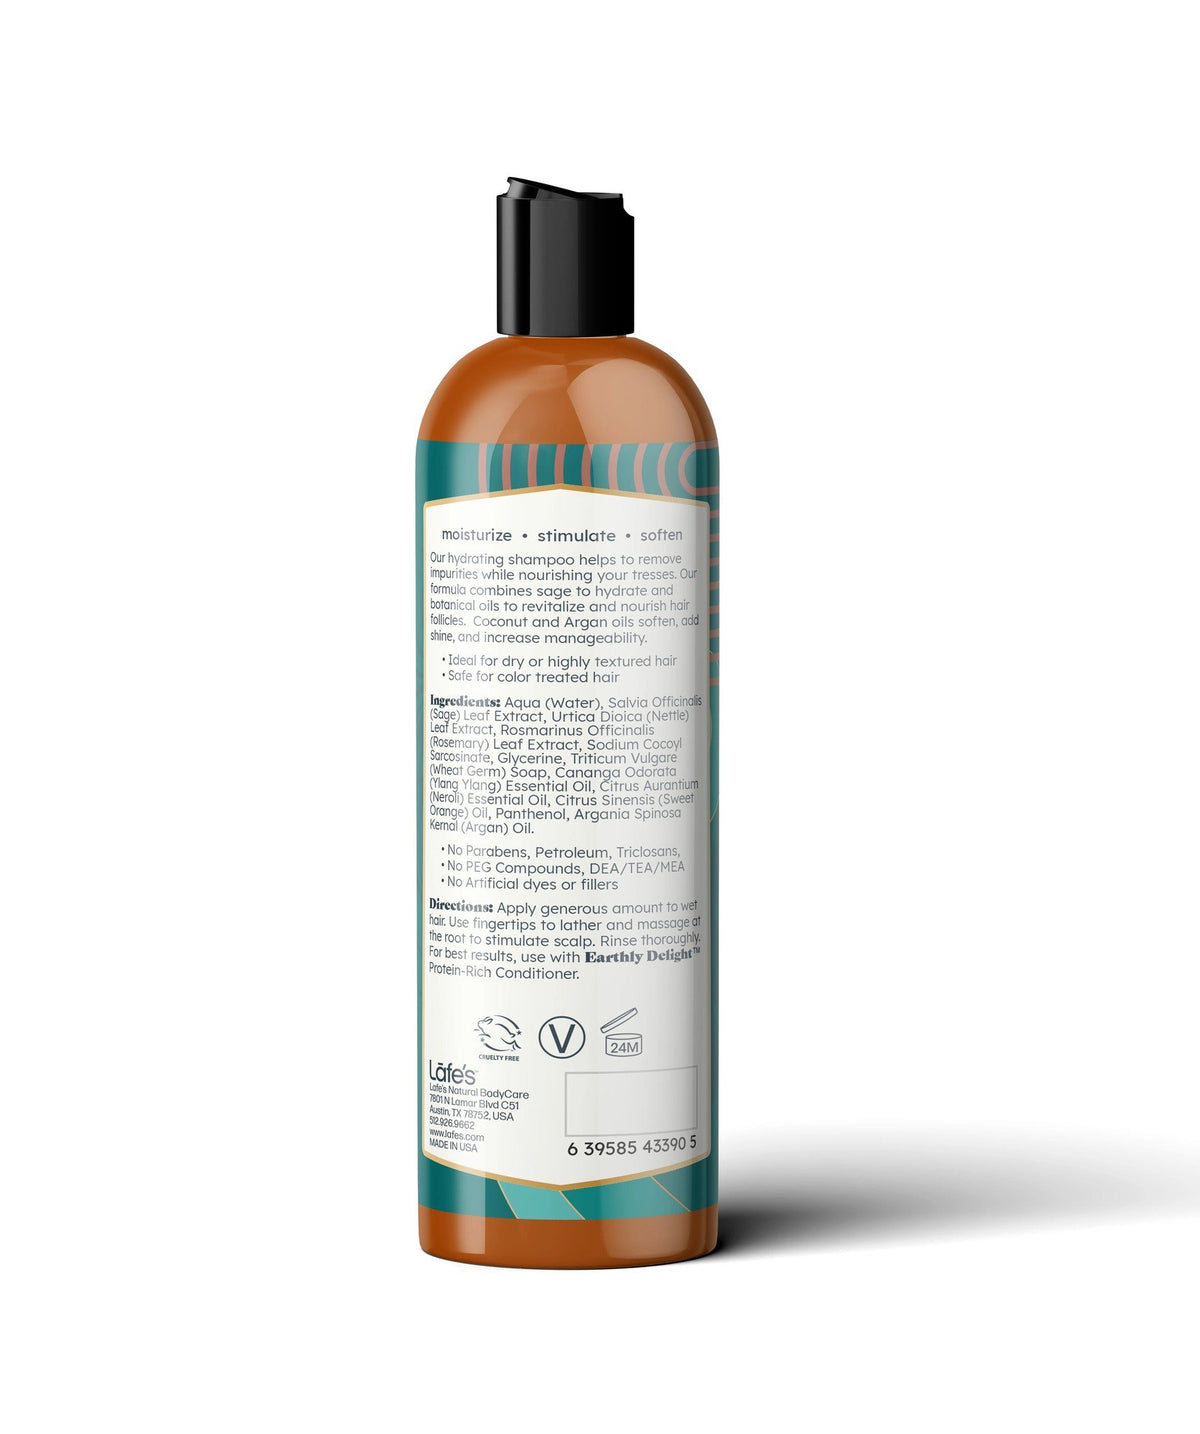 Lafe&#39;s Natural Bodycare Earthly Delight Herbal Shampoo Sage Sweet Orange 16 oz Liquid